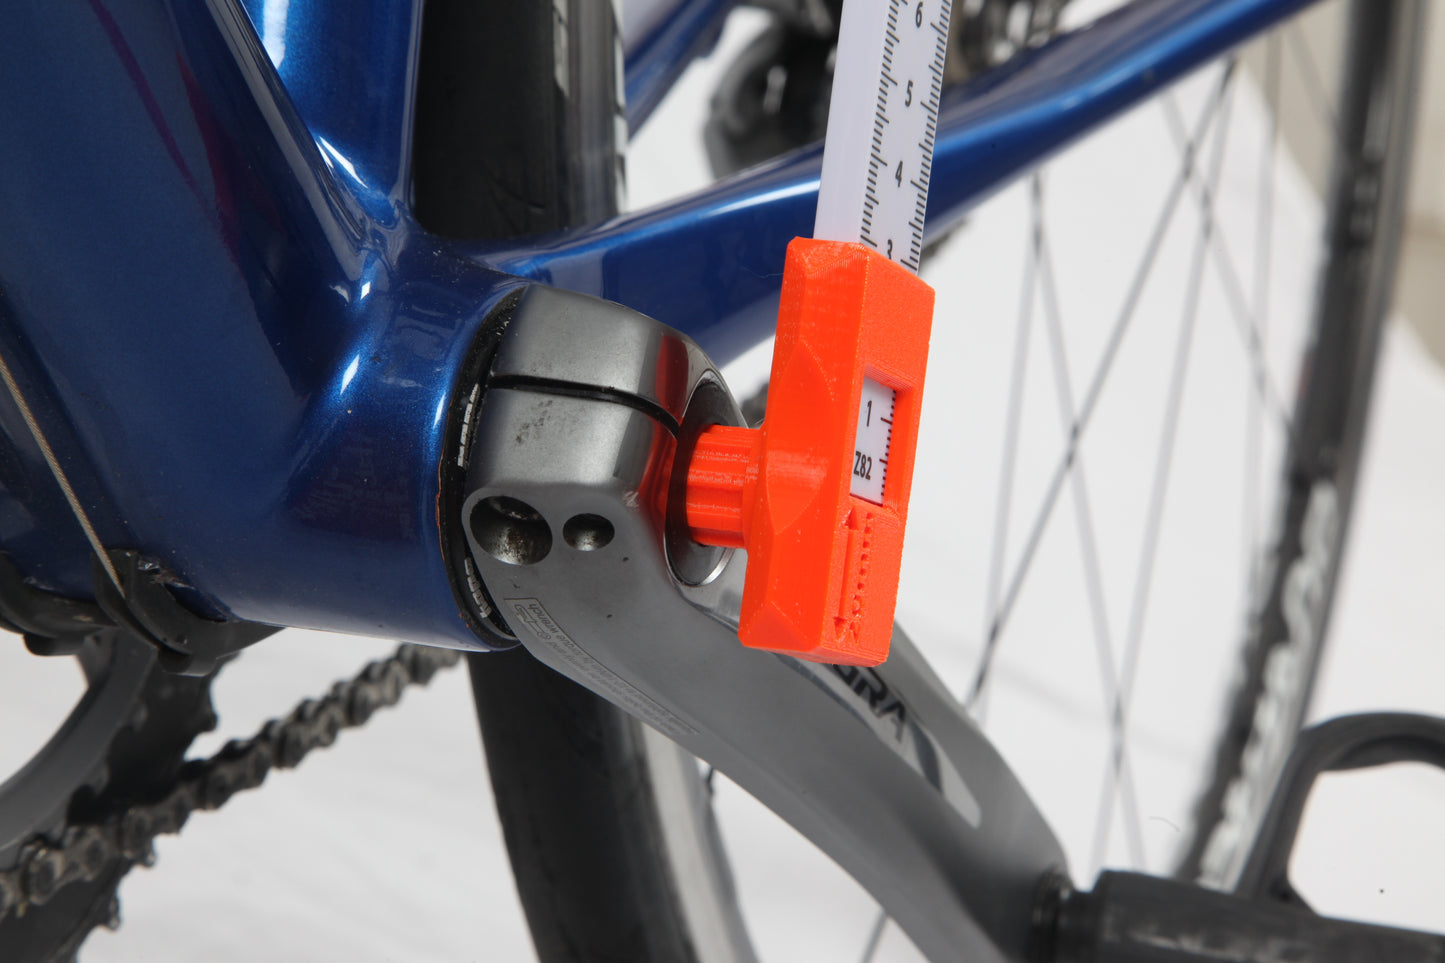 Bike Measurement and setup tool (Australia only)